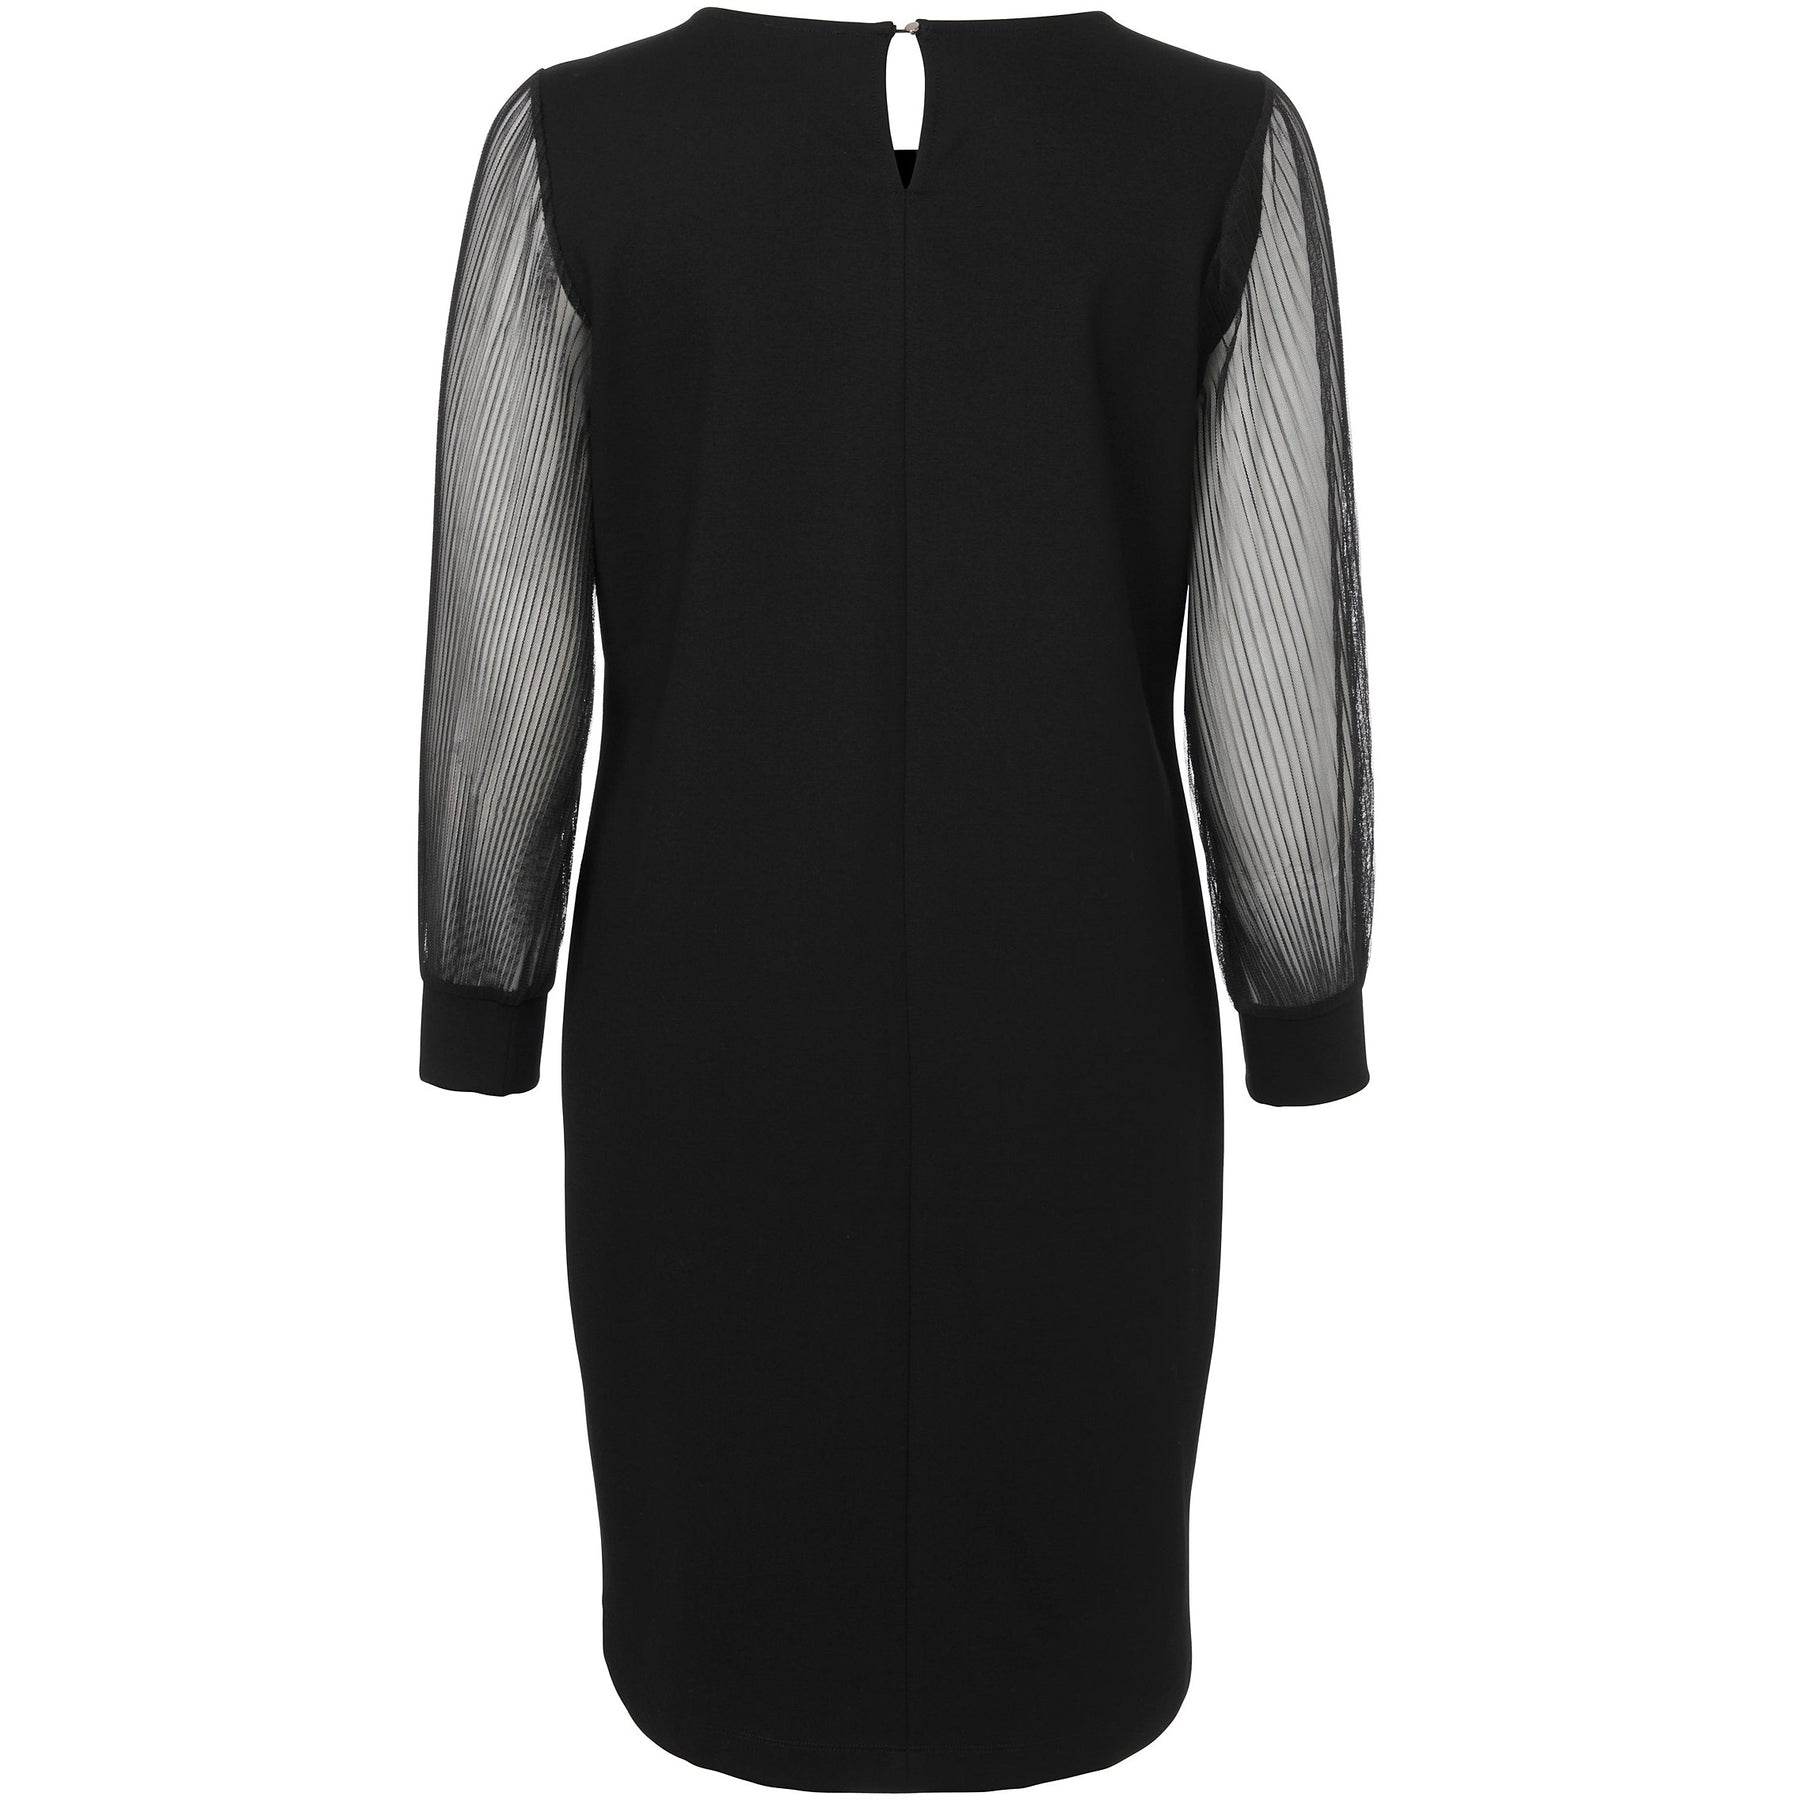 Via Appia Due Black Dress with Sheer Sleeves - Wardrobe Plus